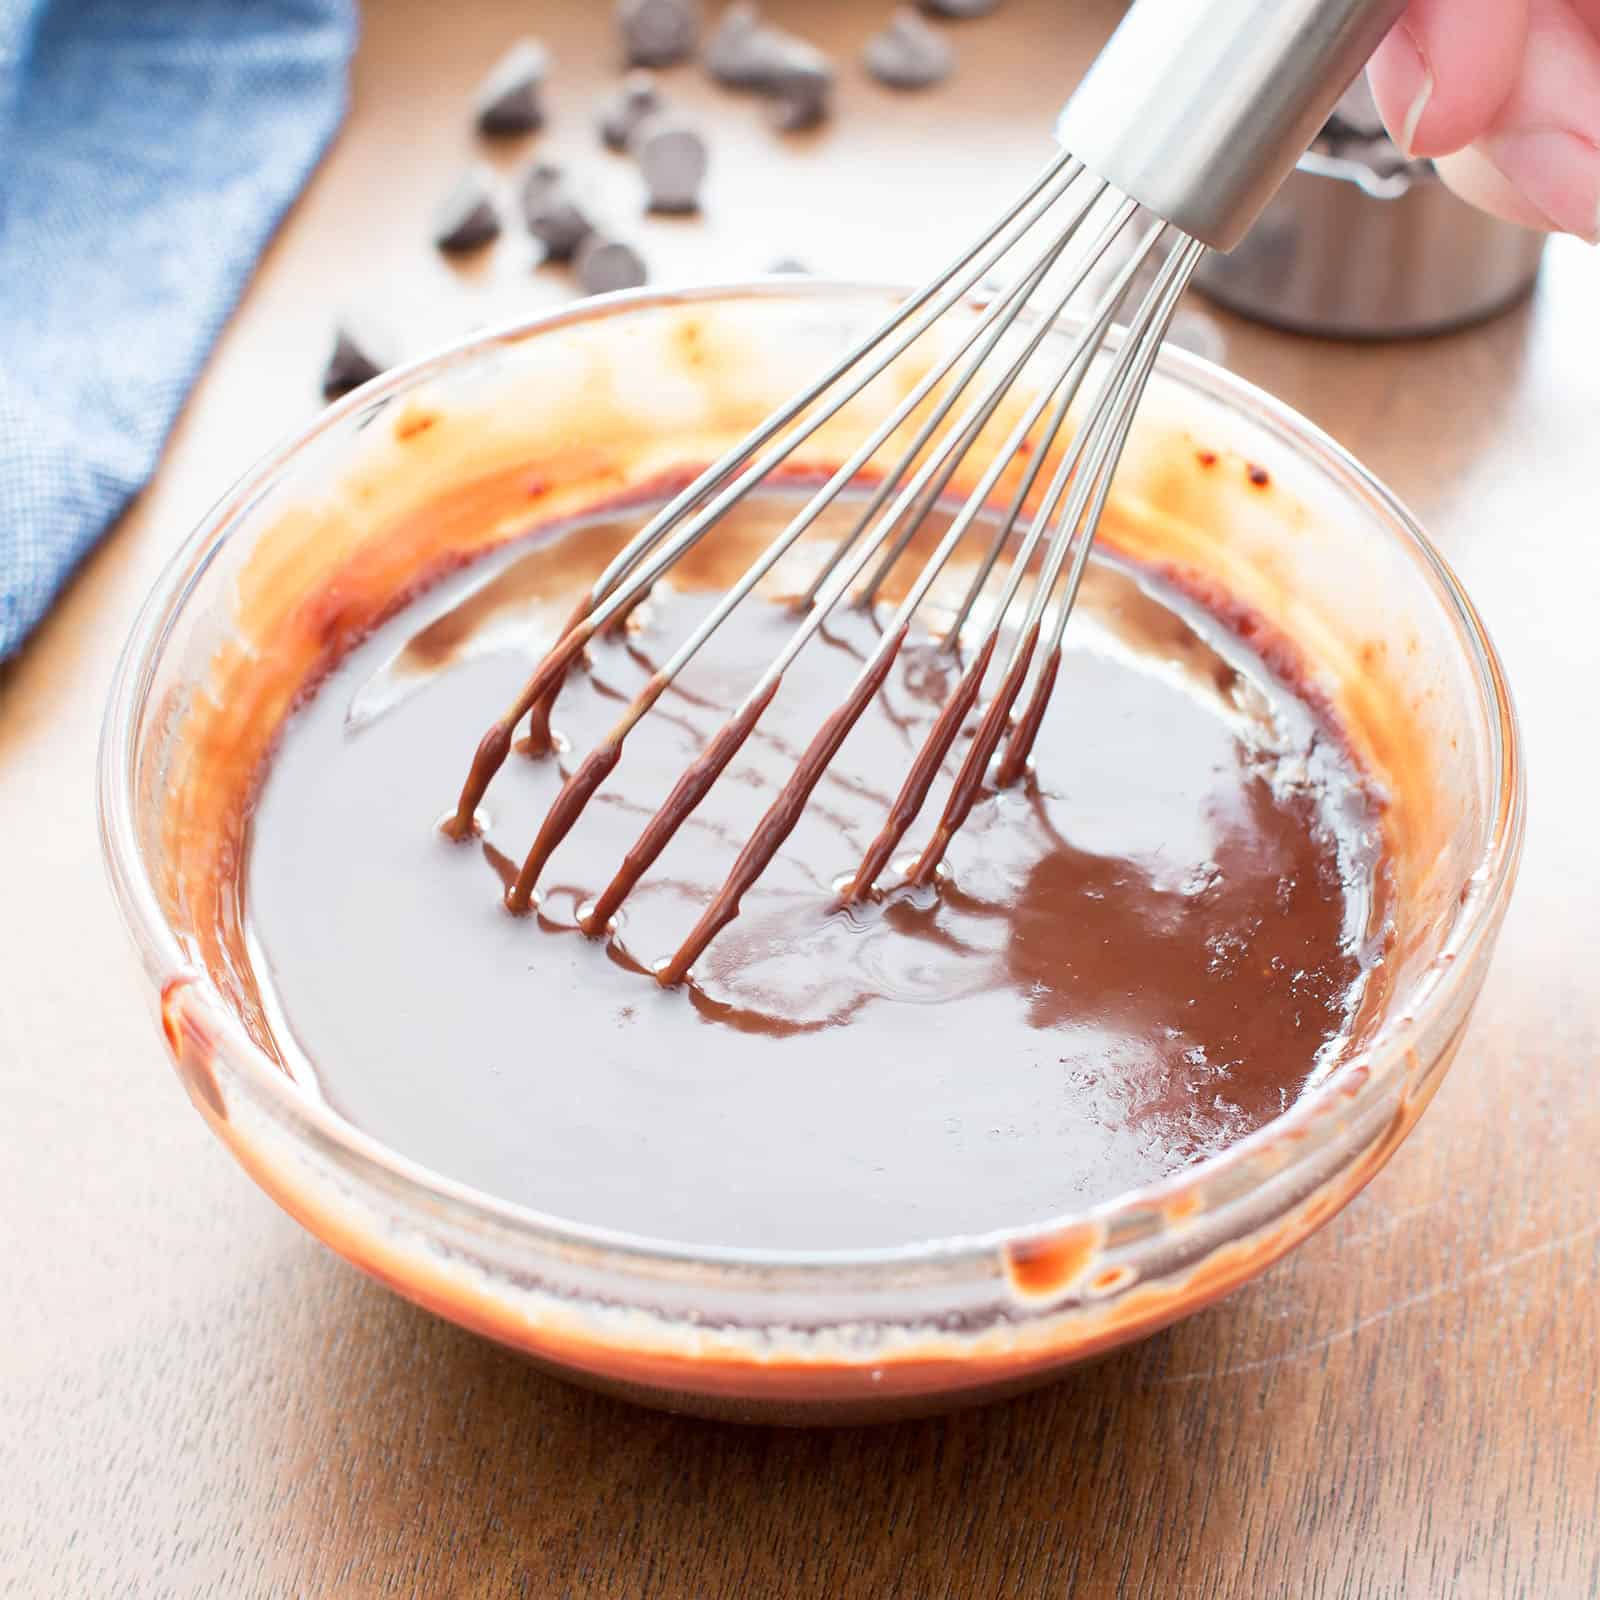 2 Ingredient Vegan Chocolate Ganache – 5 min recipe!